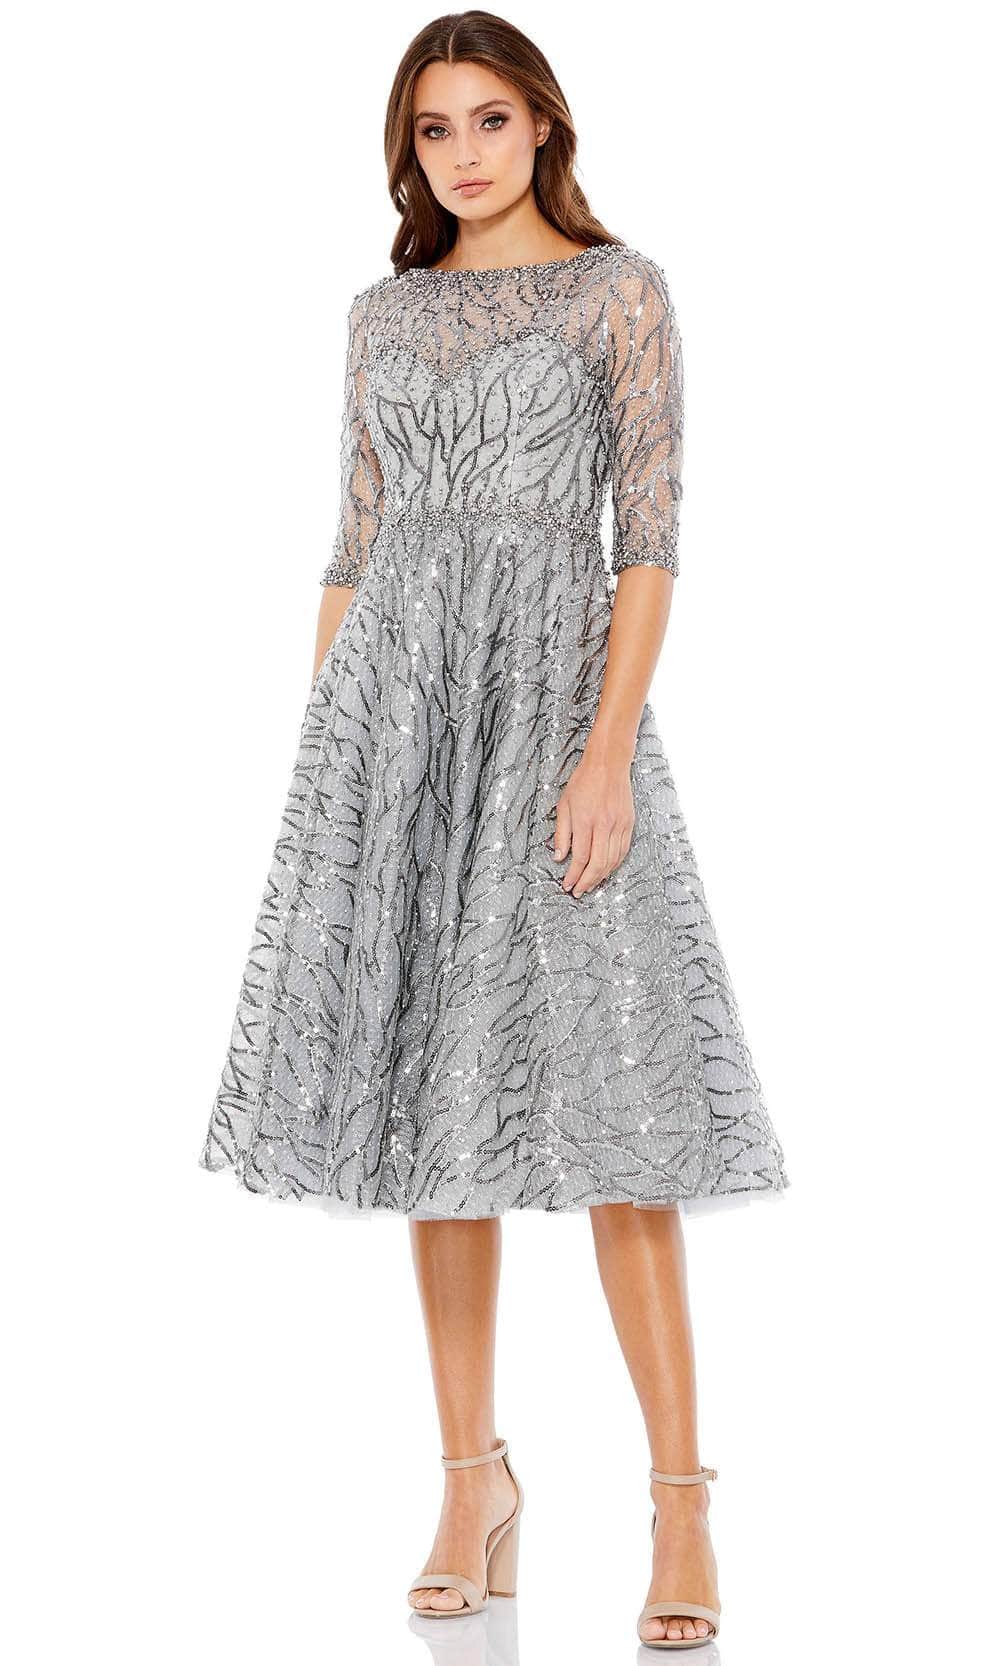 Mac Duggal 20252 - Sheer Embellished A-Line Cocktail Dress Special Occasion Dress 2 / Platinum